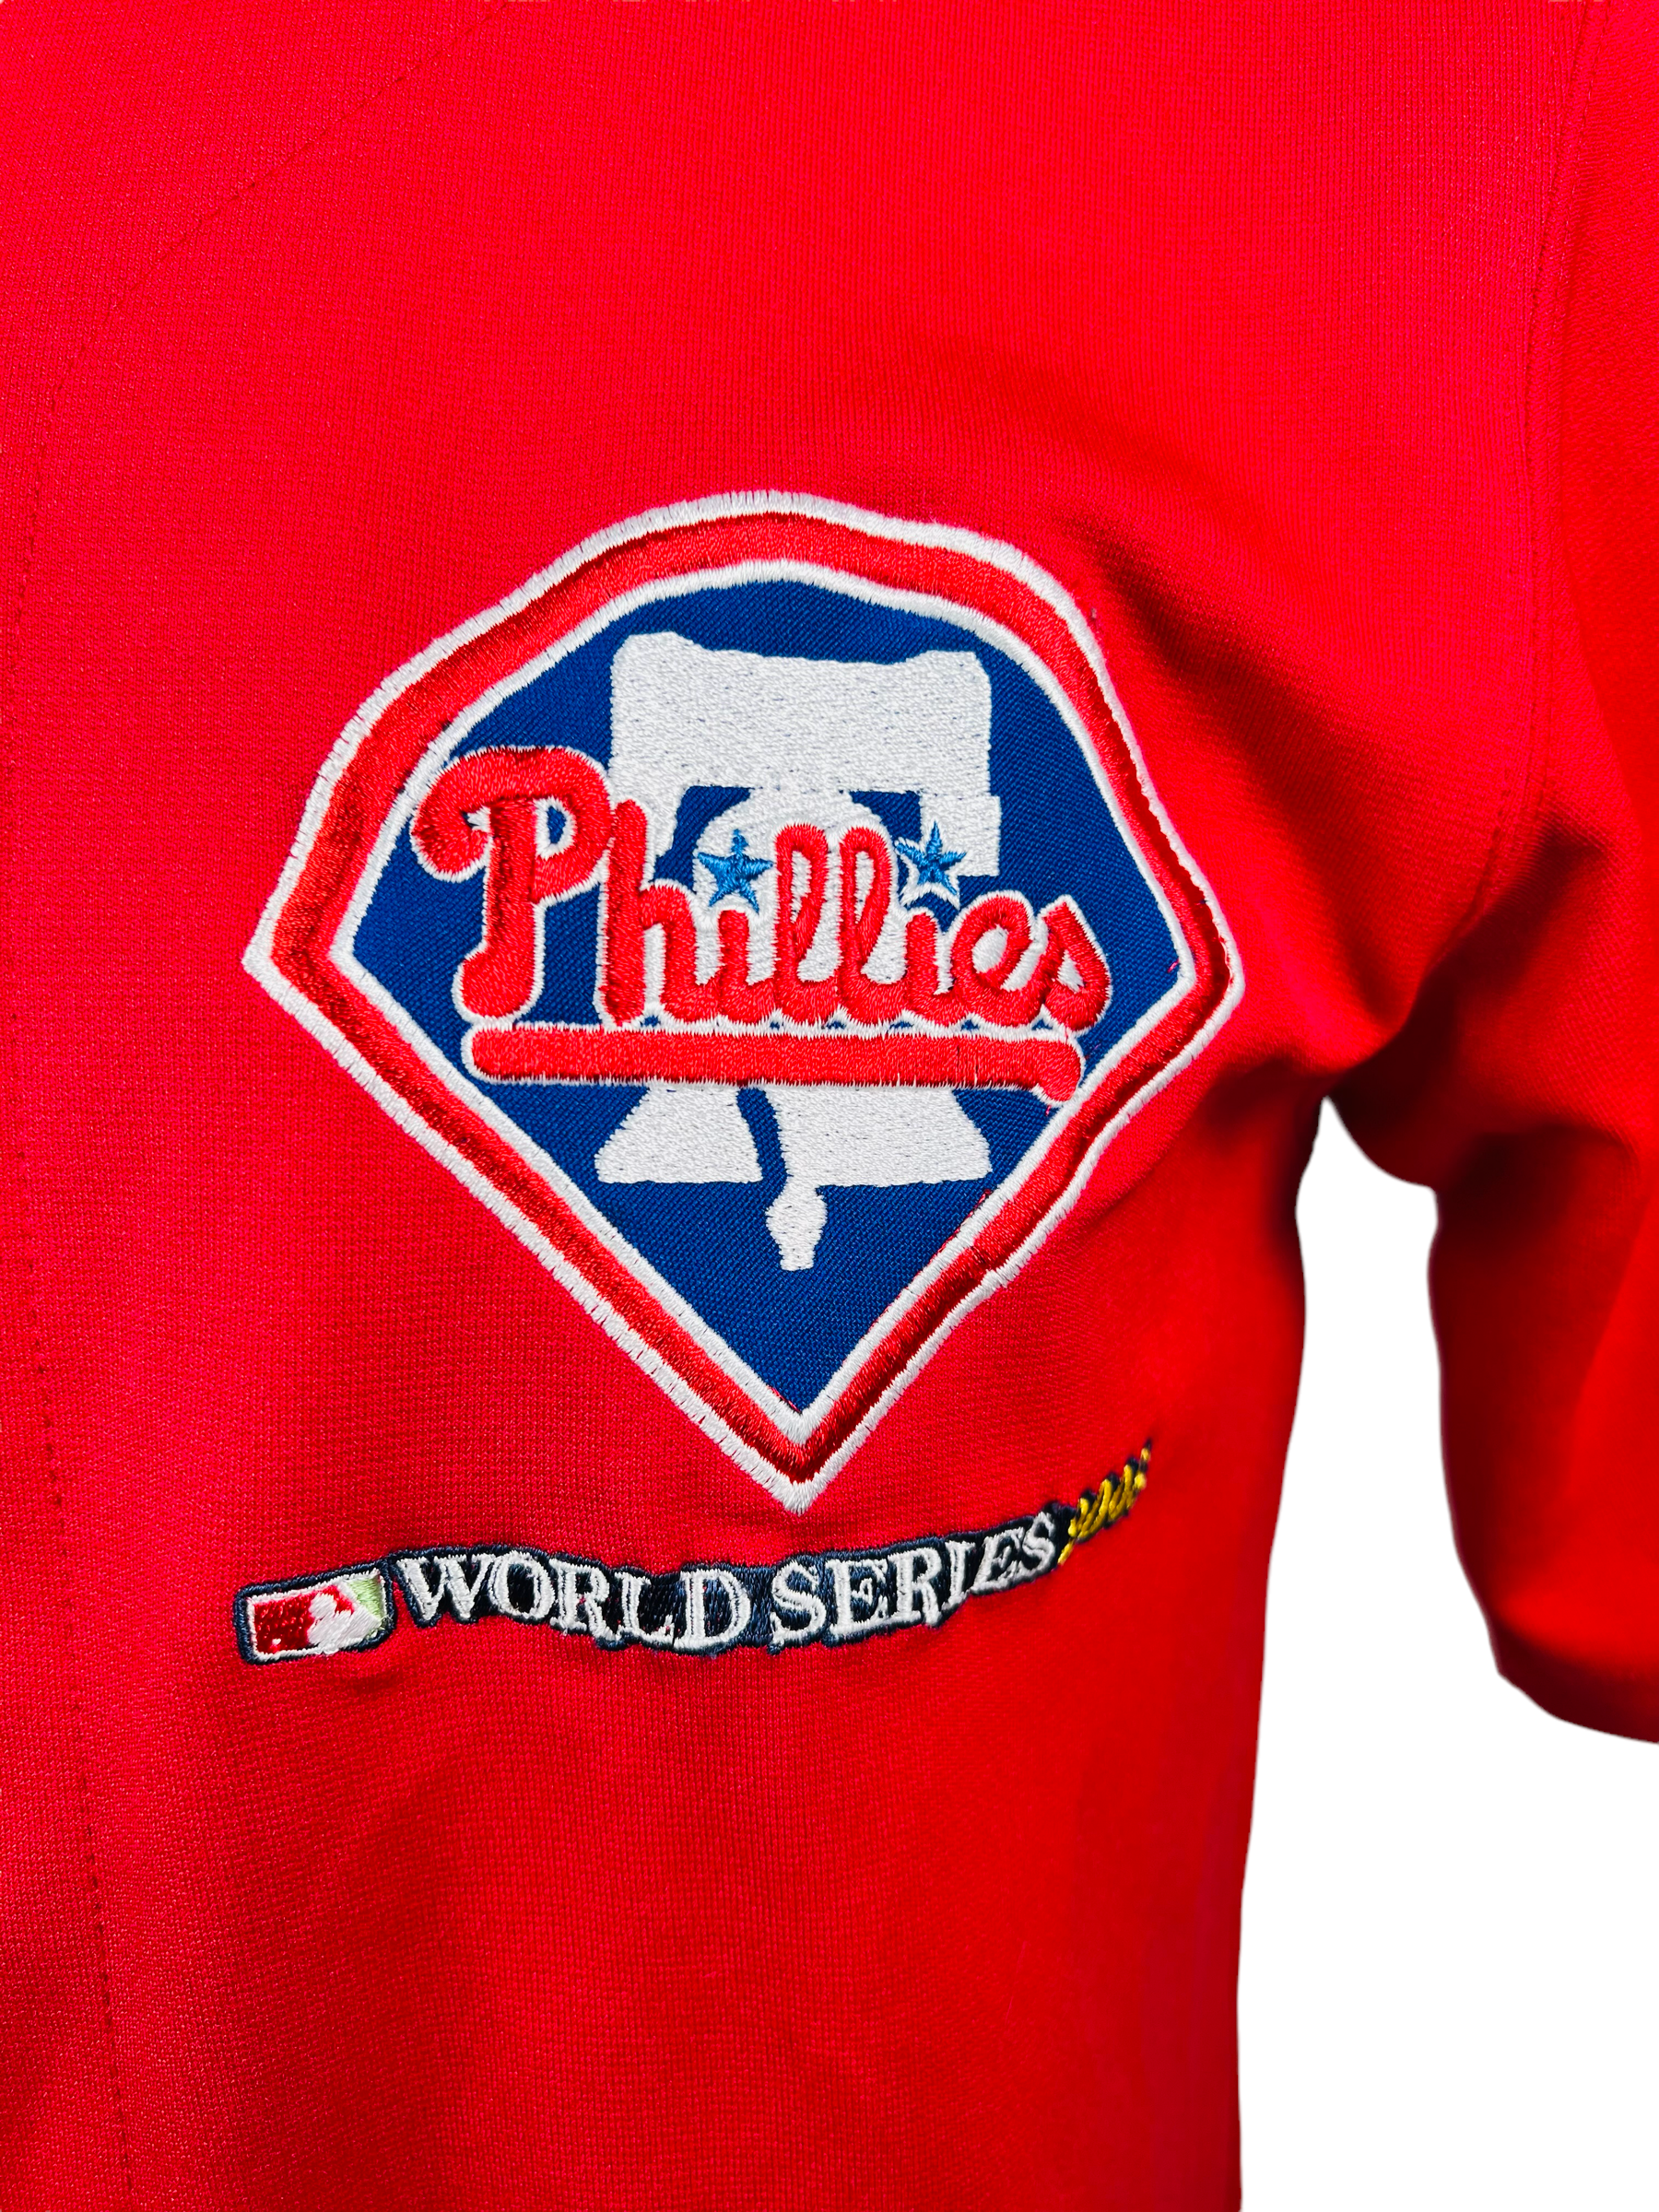 Philadelphia Phillies T-Shirts in Philadelphia Phillies Team Shop